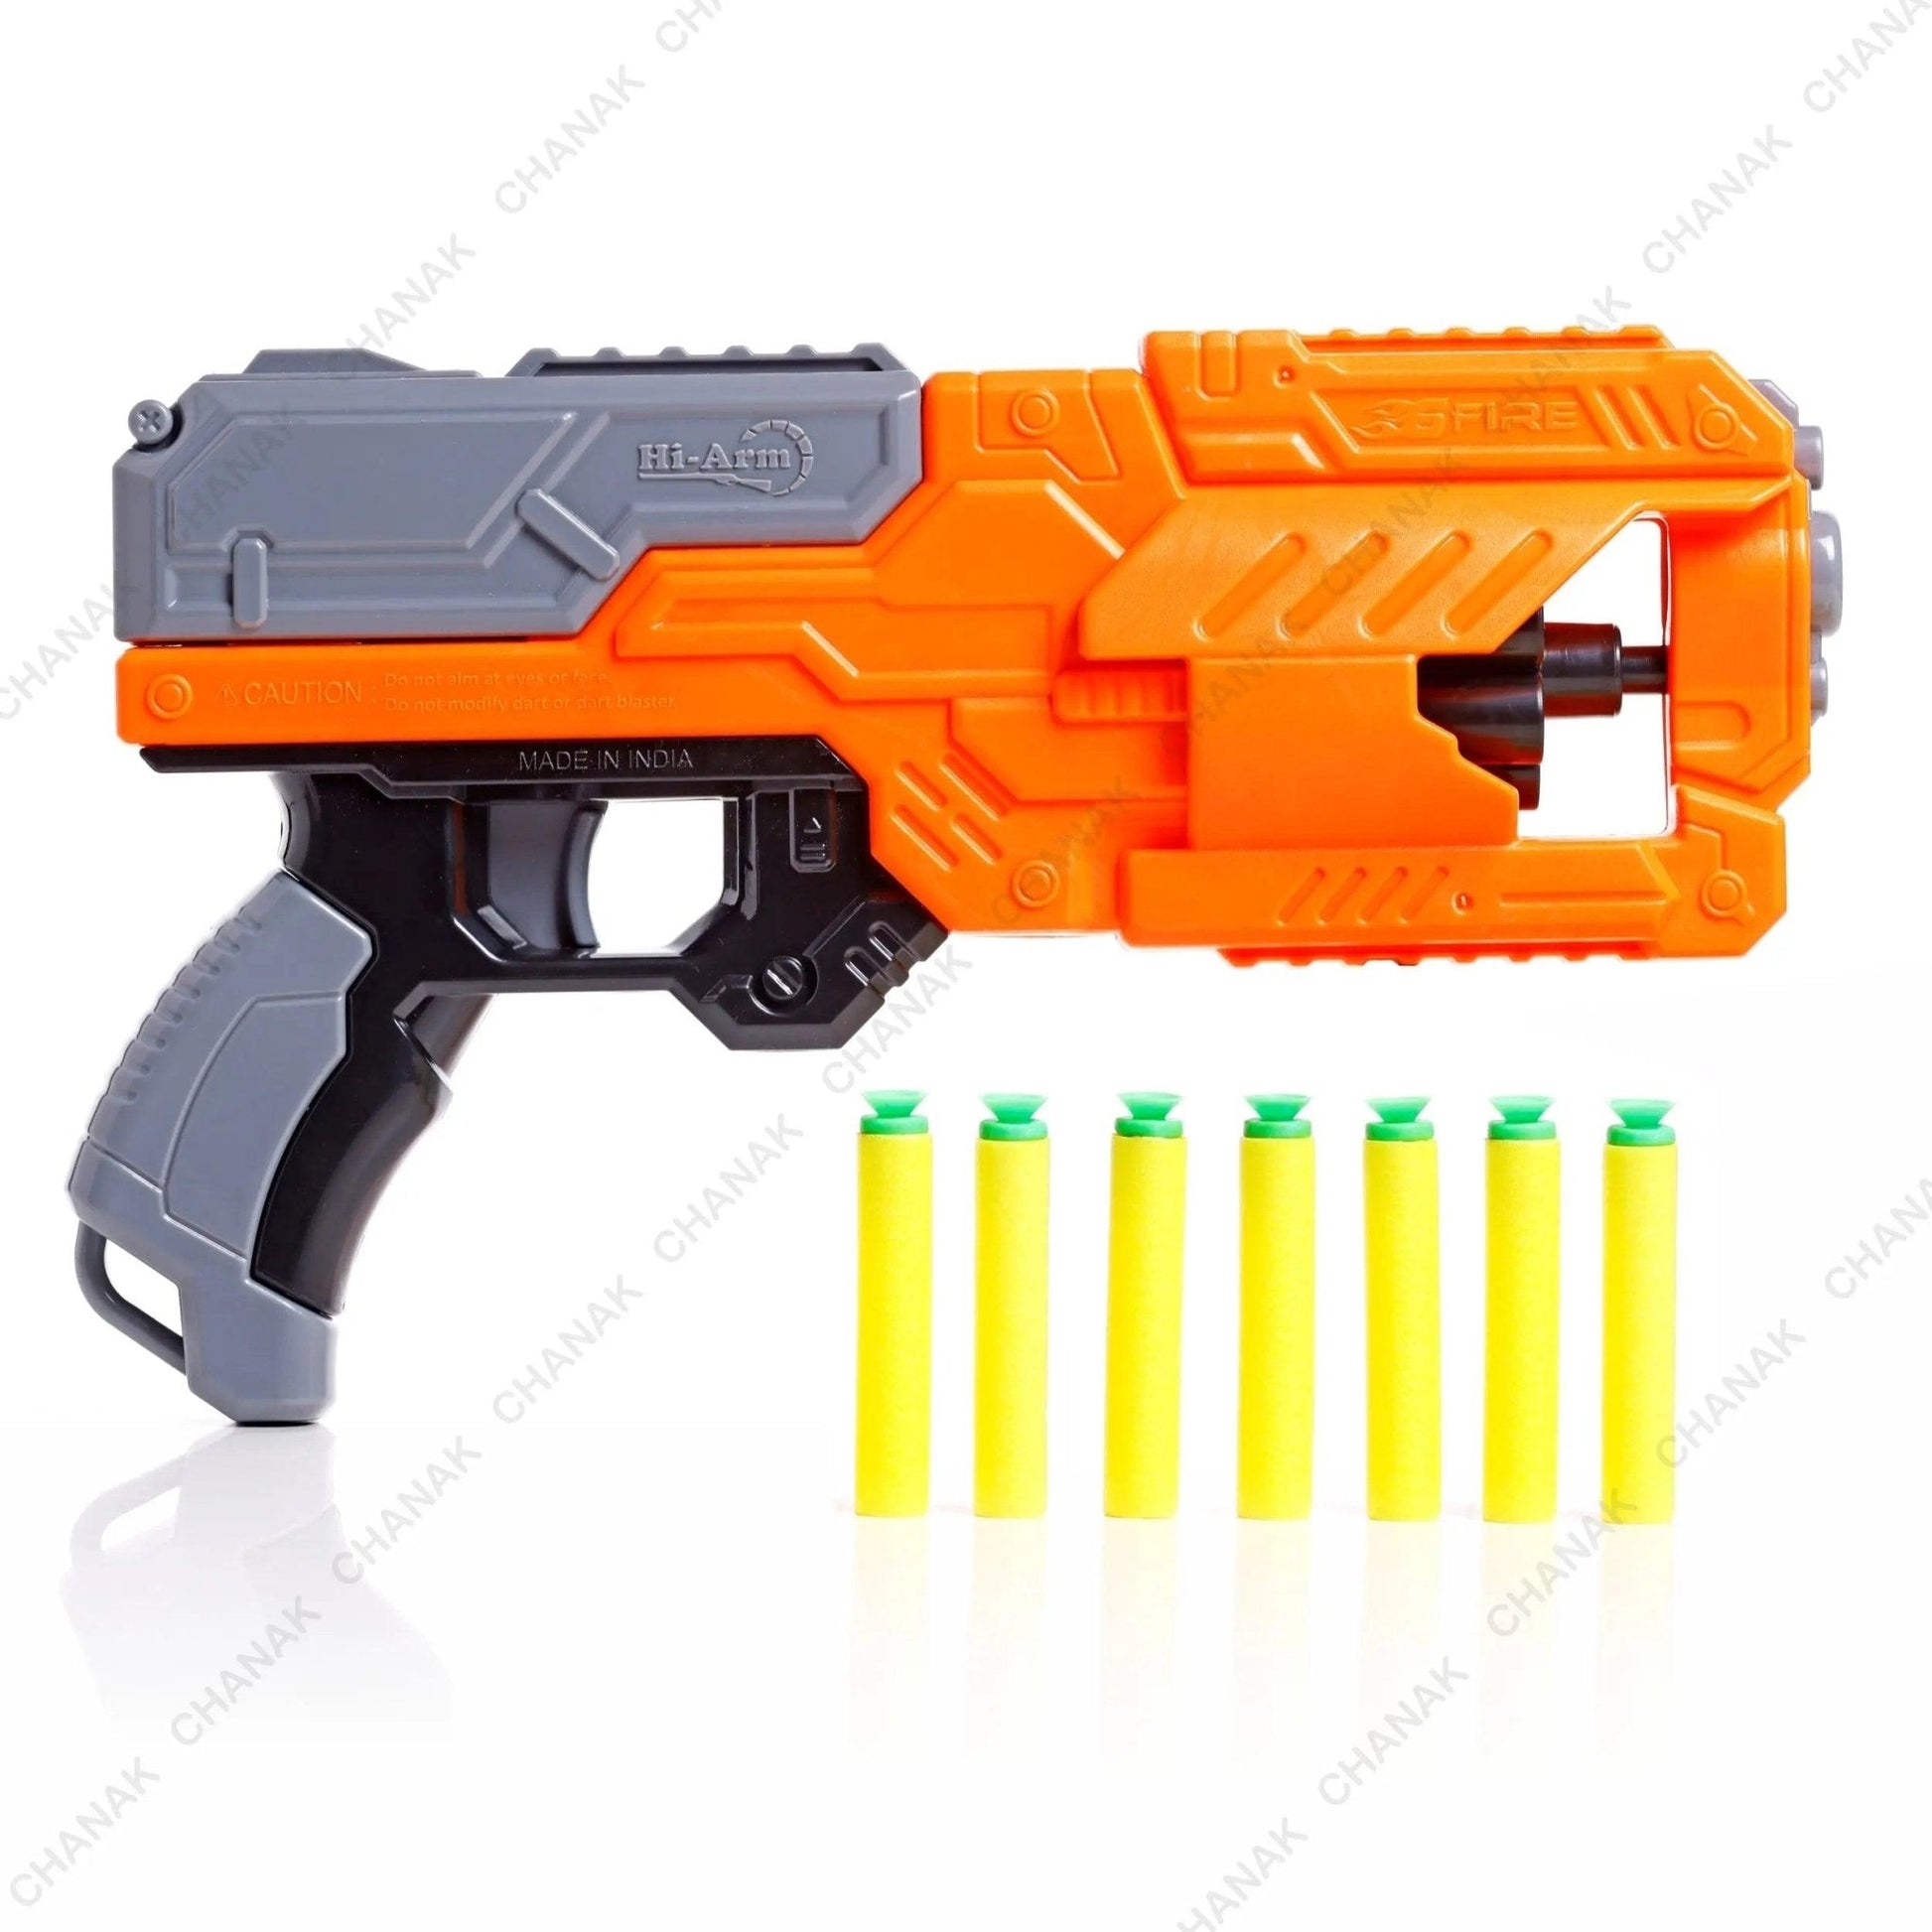 Chanak Six Fire Toy Blaster Gun (Orange) - chanak